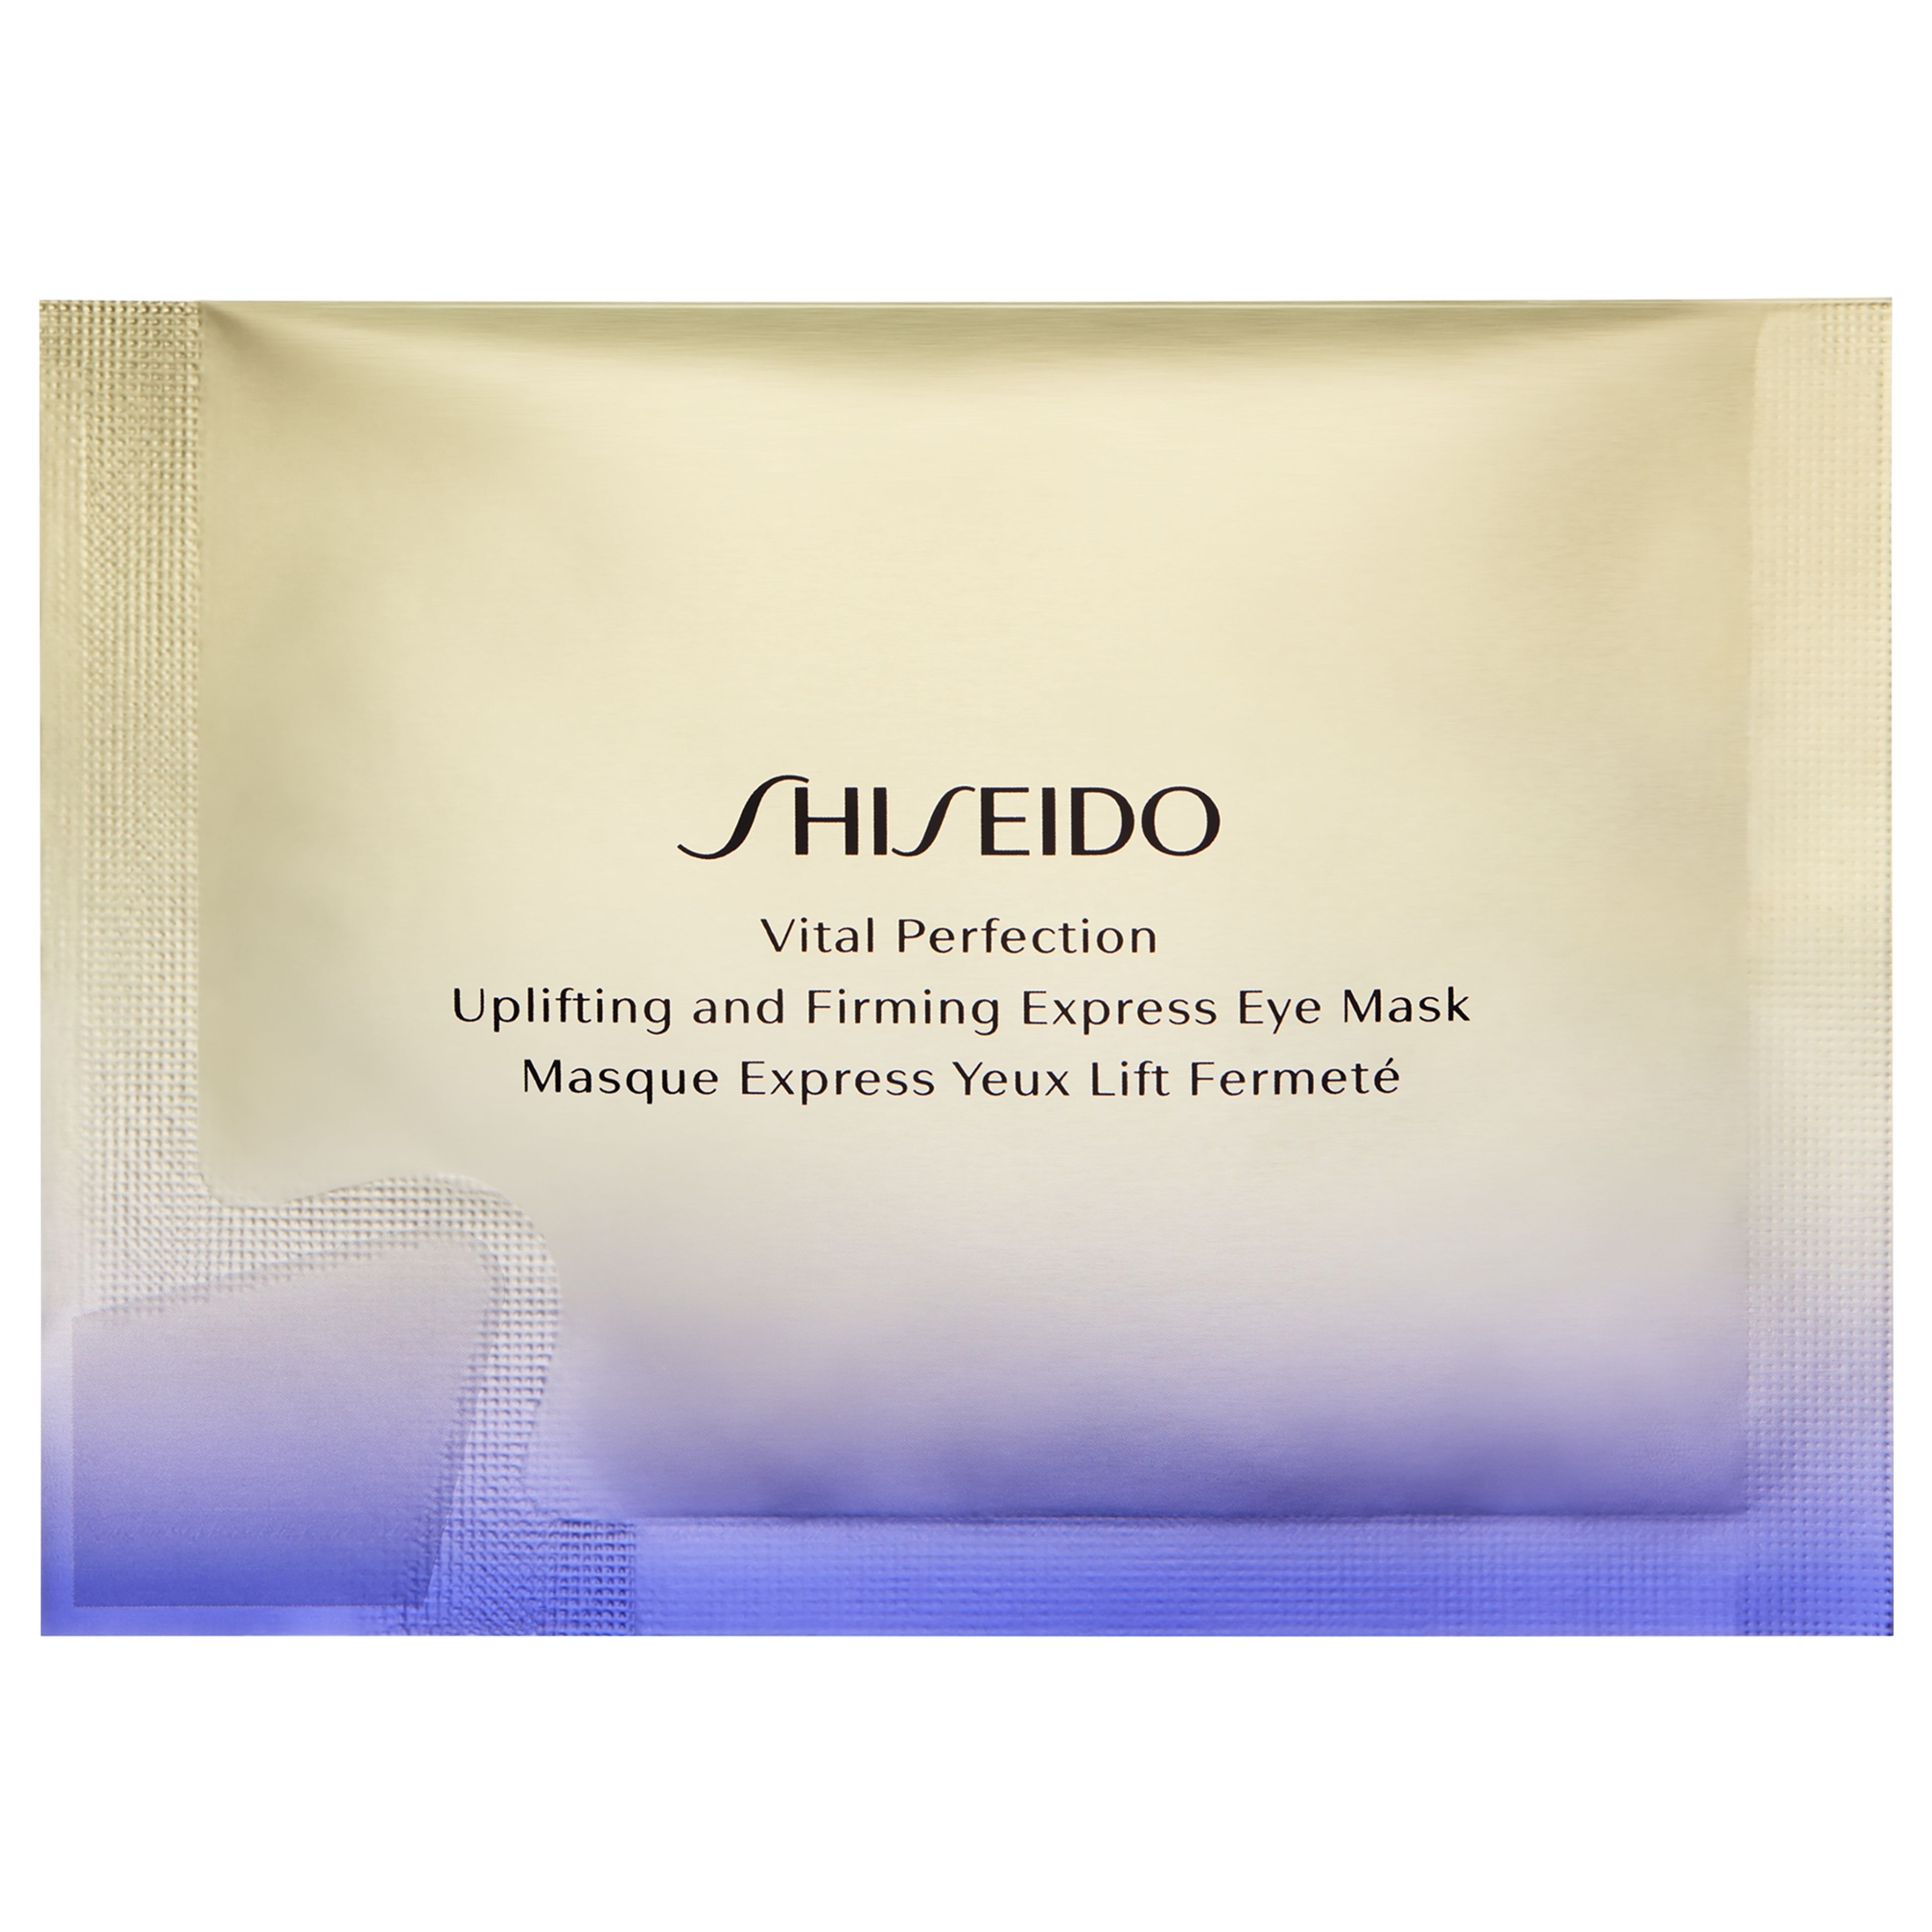 Shiseido Uplifting And Firming Express Eye Mask 1